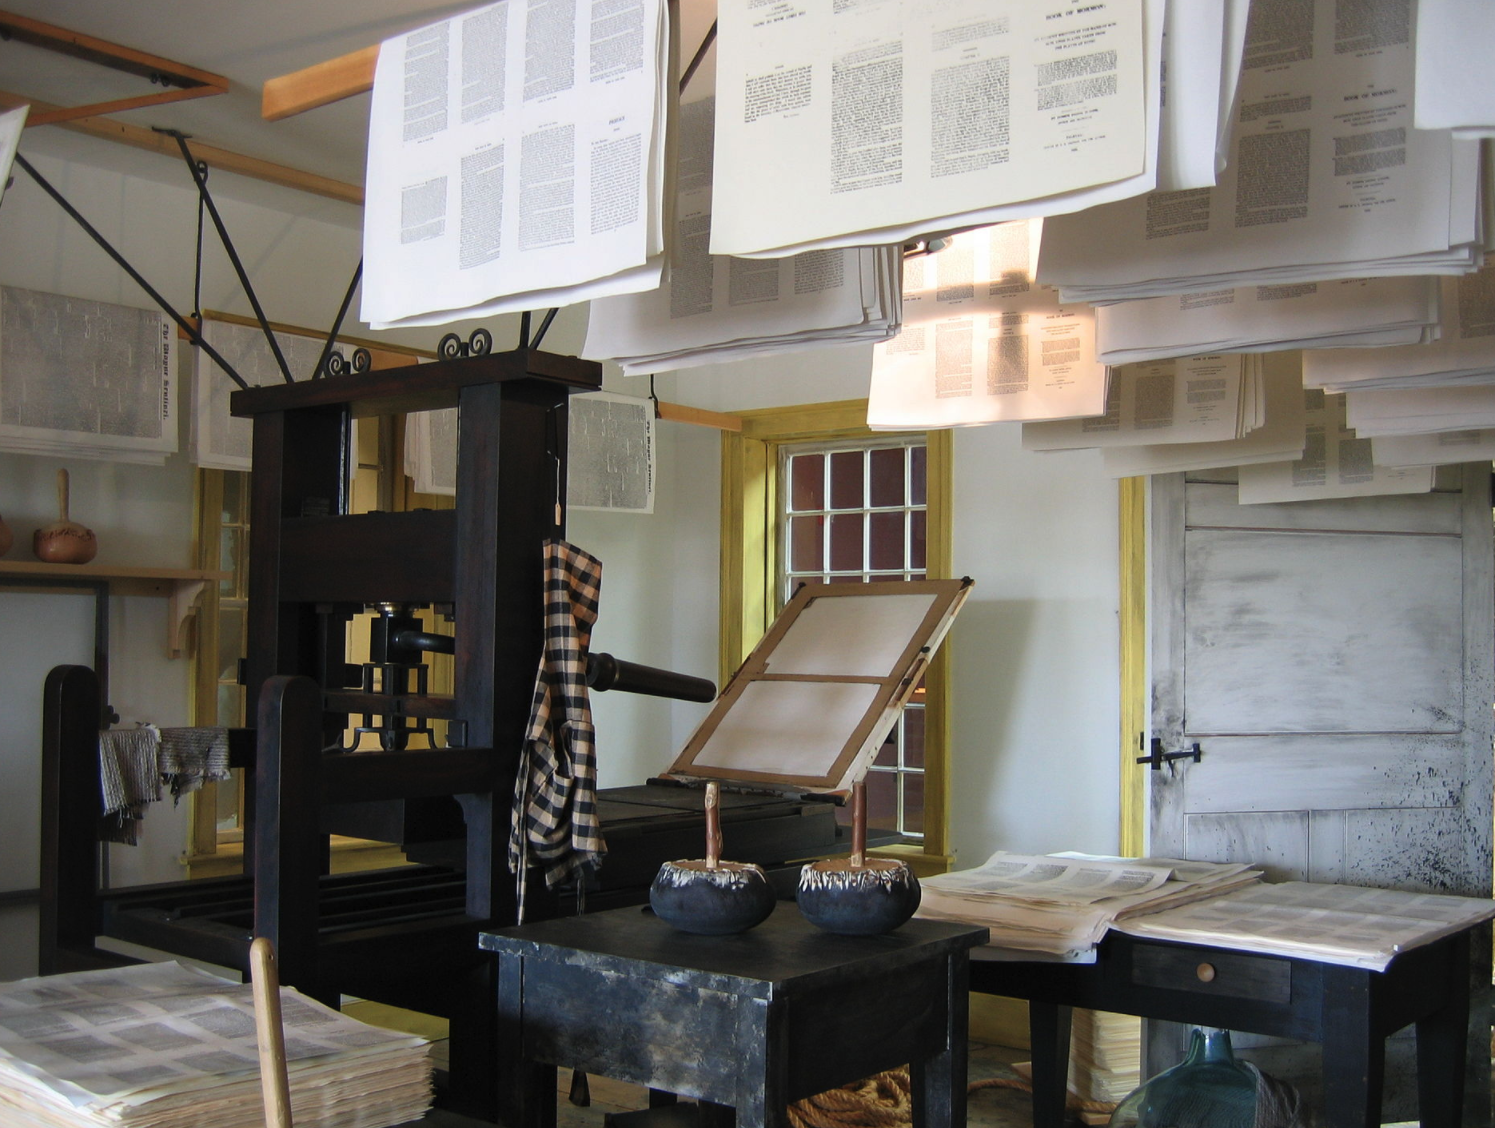 A view of the restored E. B. Grandin printing shop